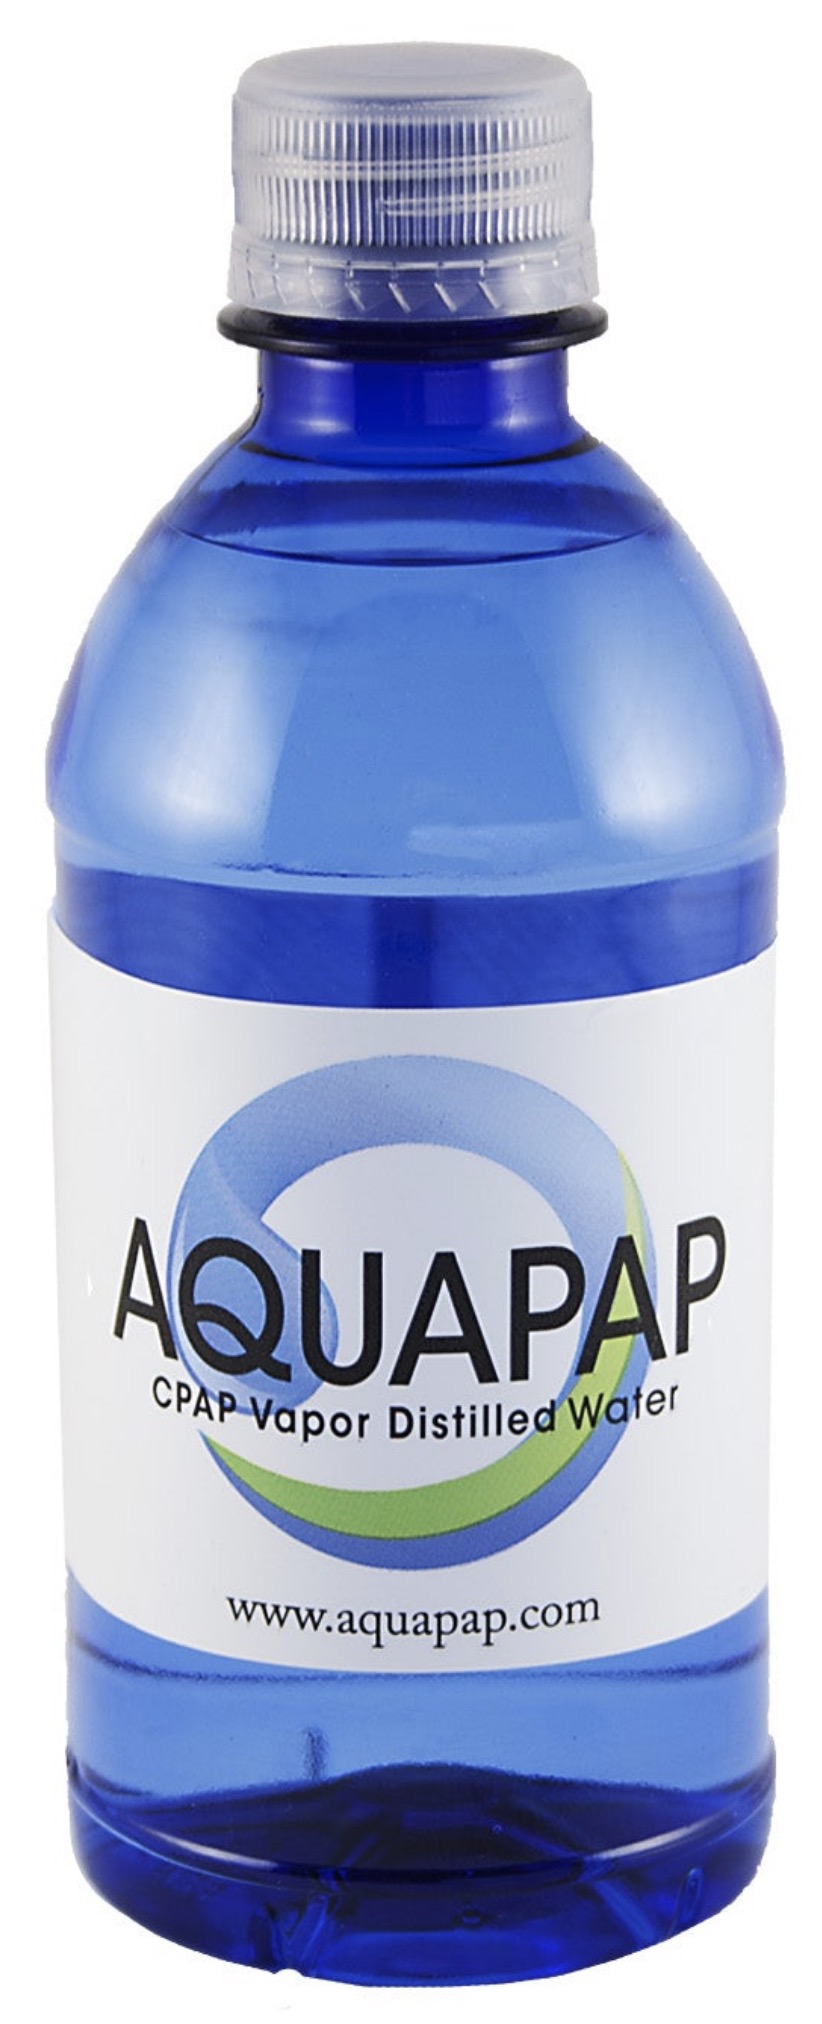 Aquapap 8oz bottle of distilled water